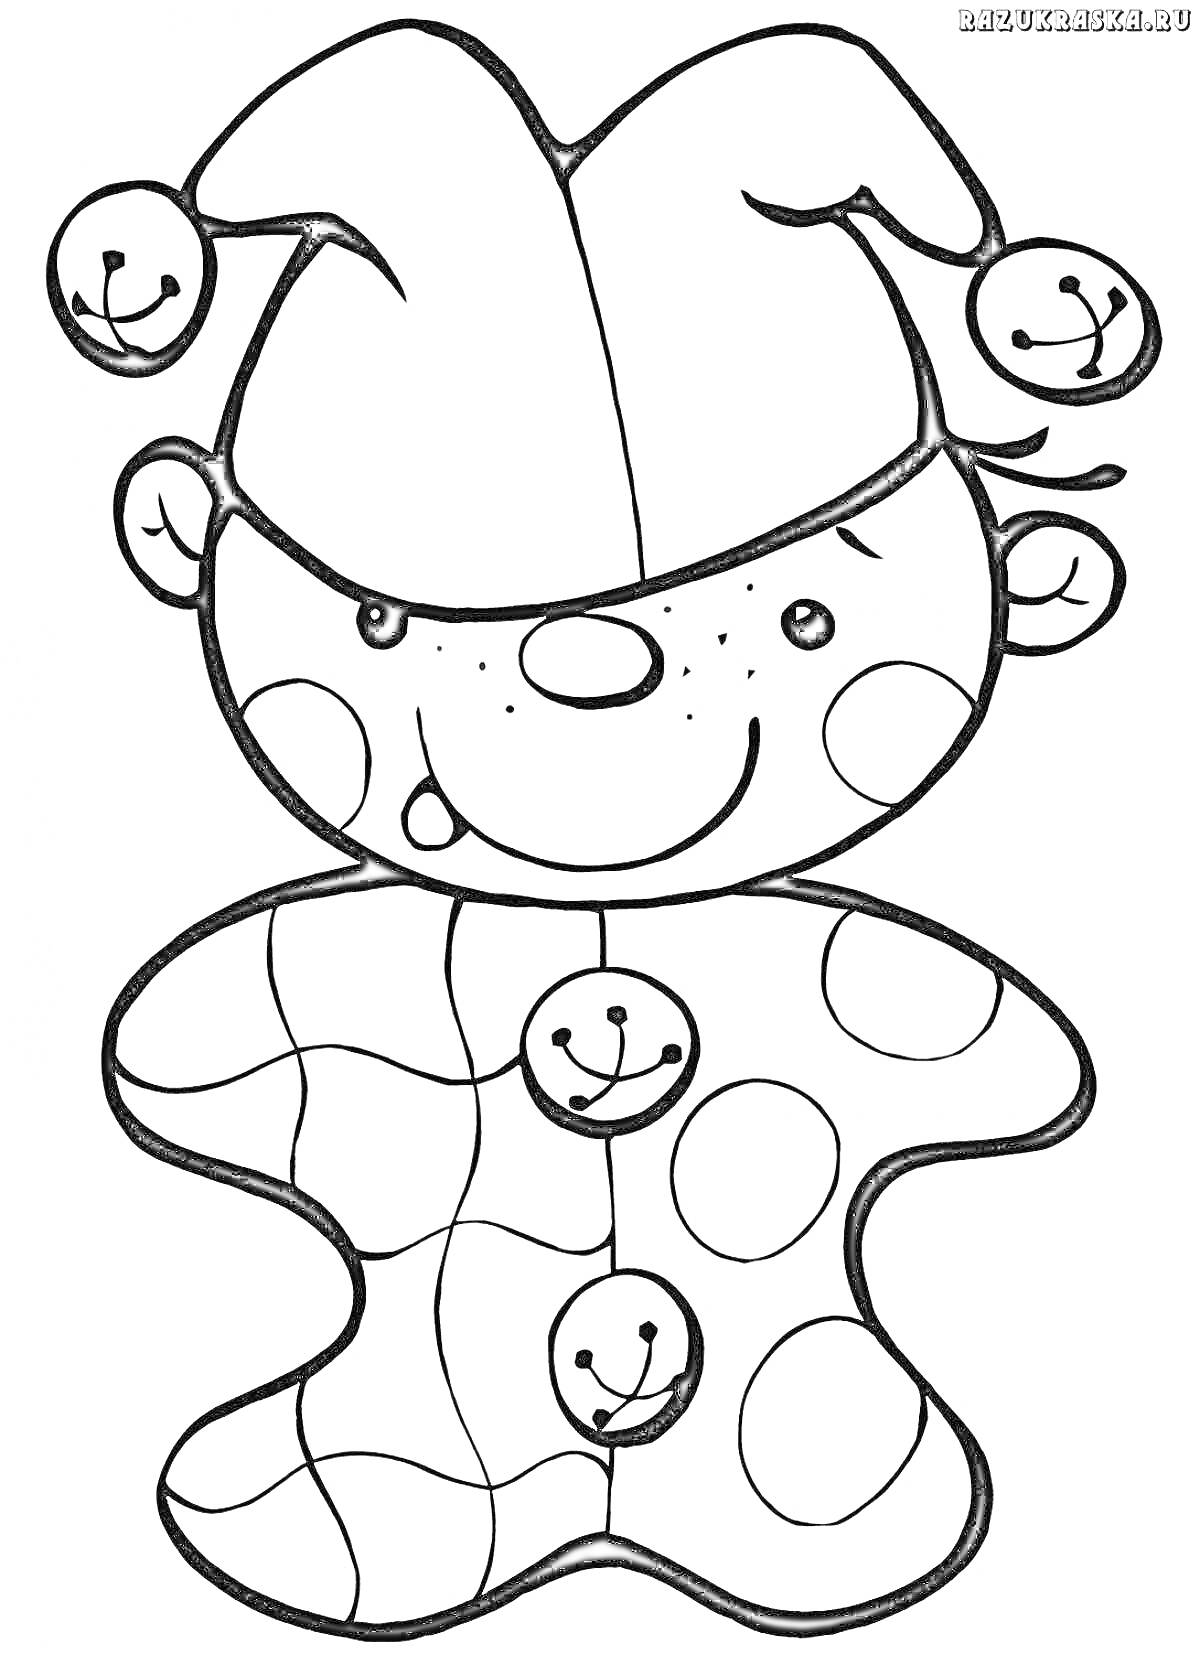 Петрушка на картинке с колпаком и бубенцами, лицо с веснушками, одежда с узорами